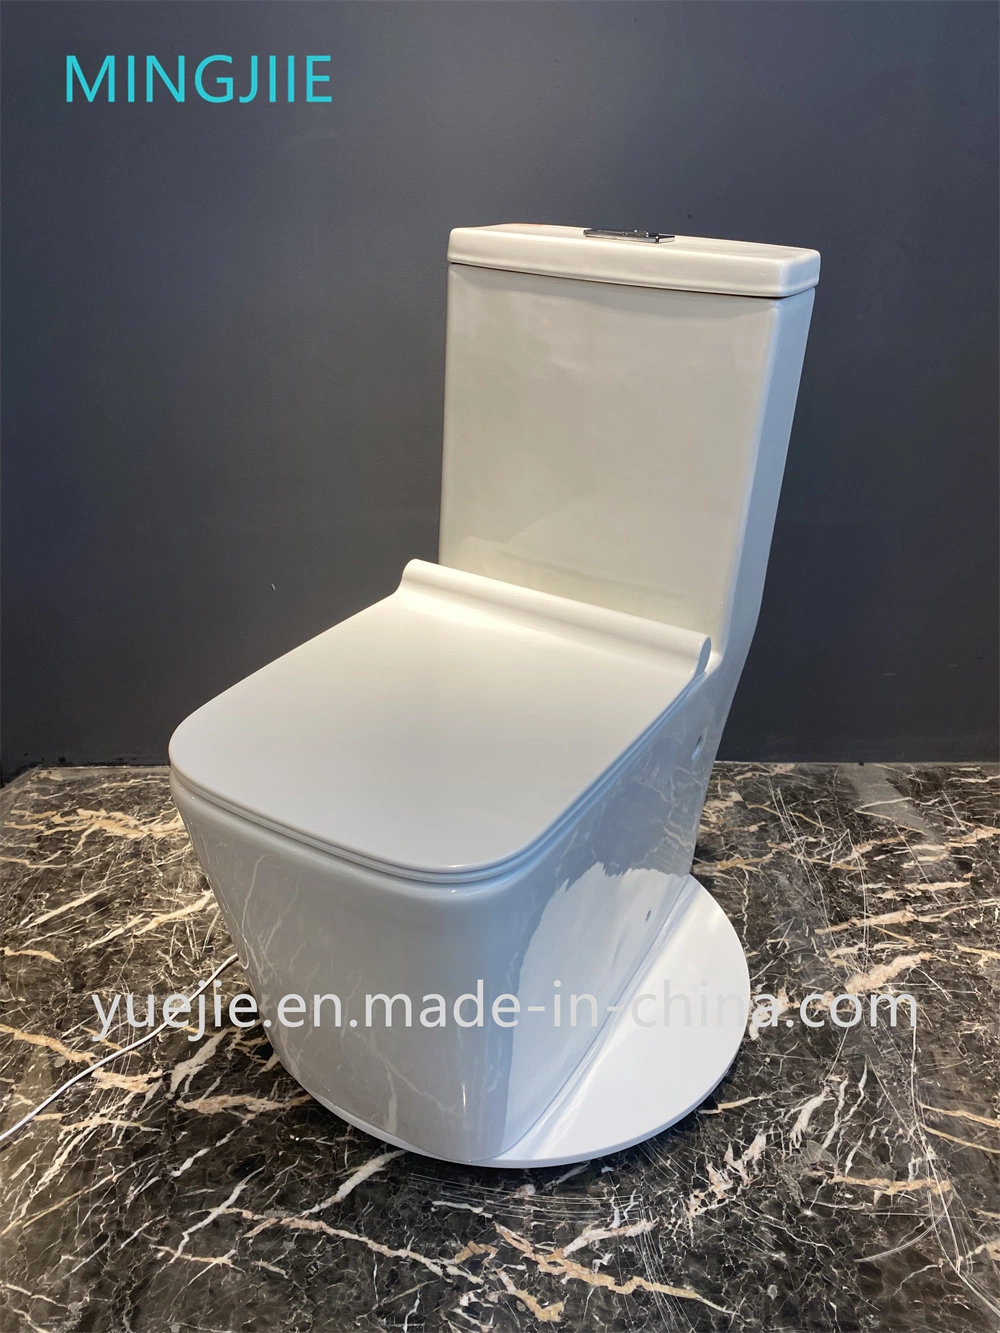 European Style Sanitary Ware Wc Toilets Modern Design Washdown One-Piece Ceramic Toilet